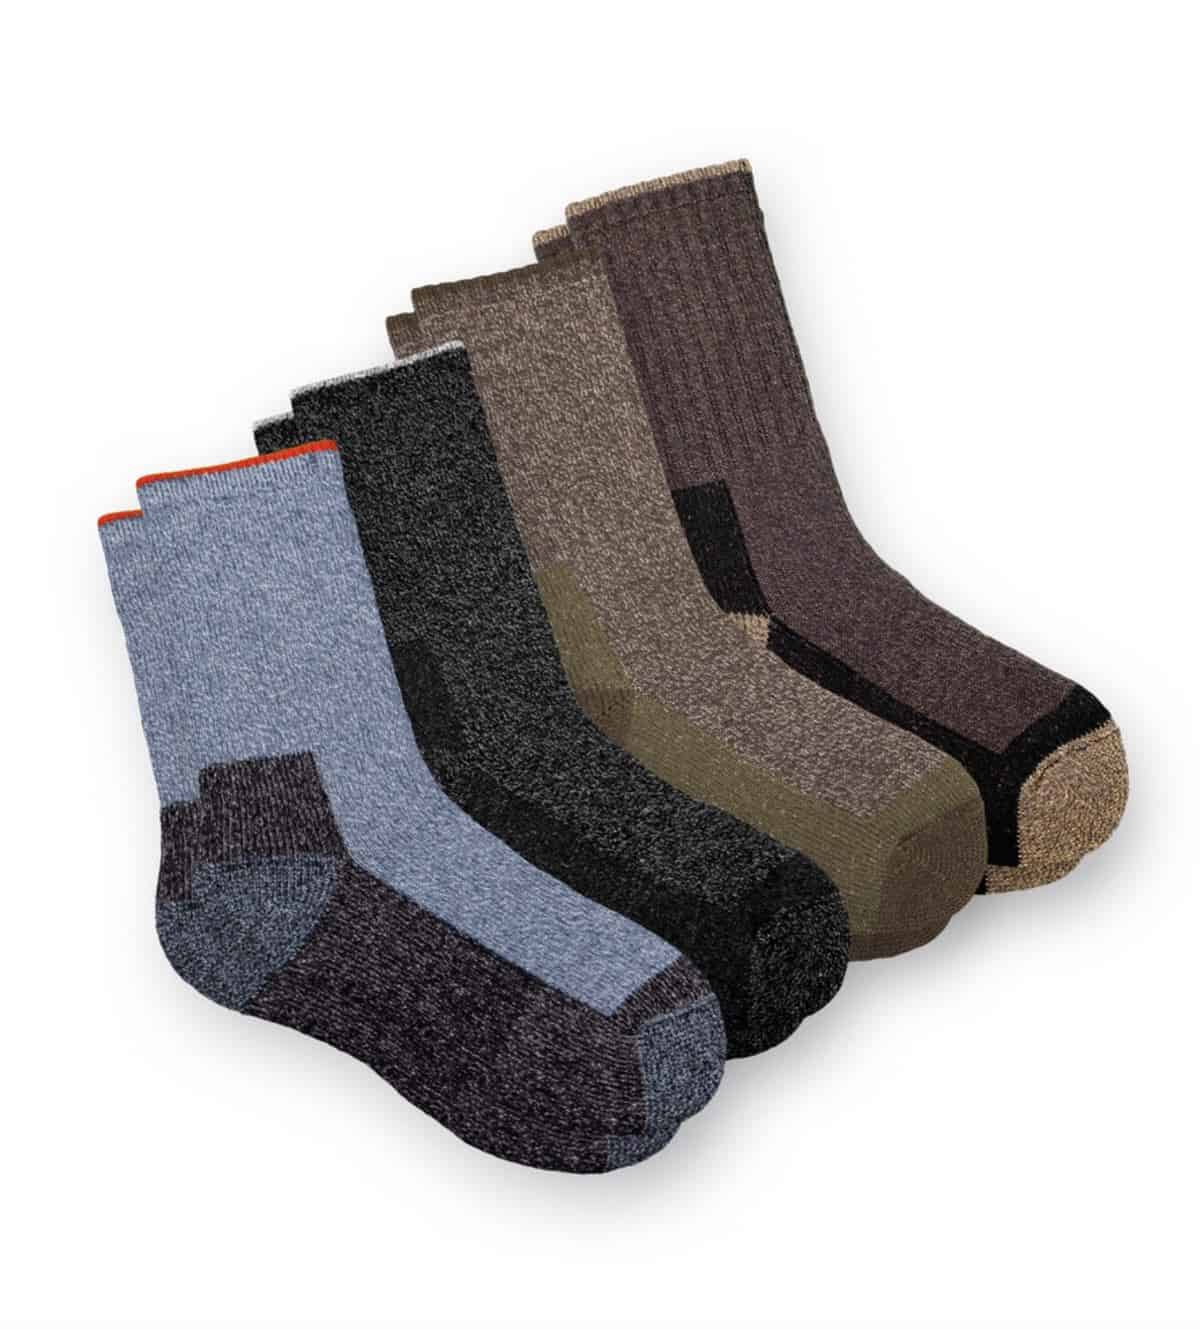 Thermal eco-friendly vegan hiking socks from Ecosox. 